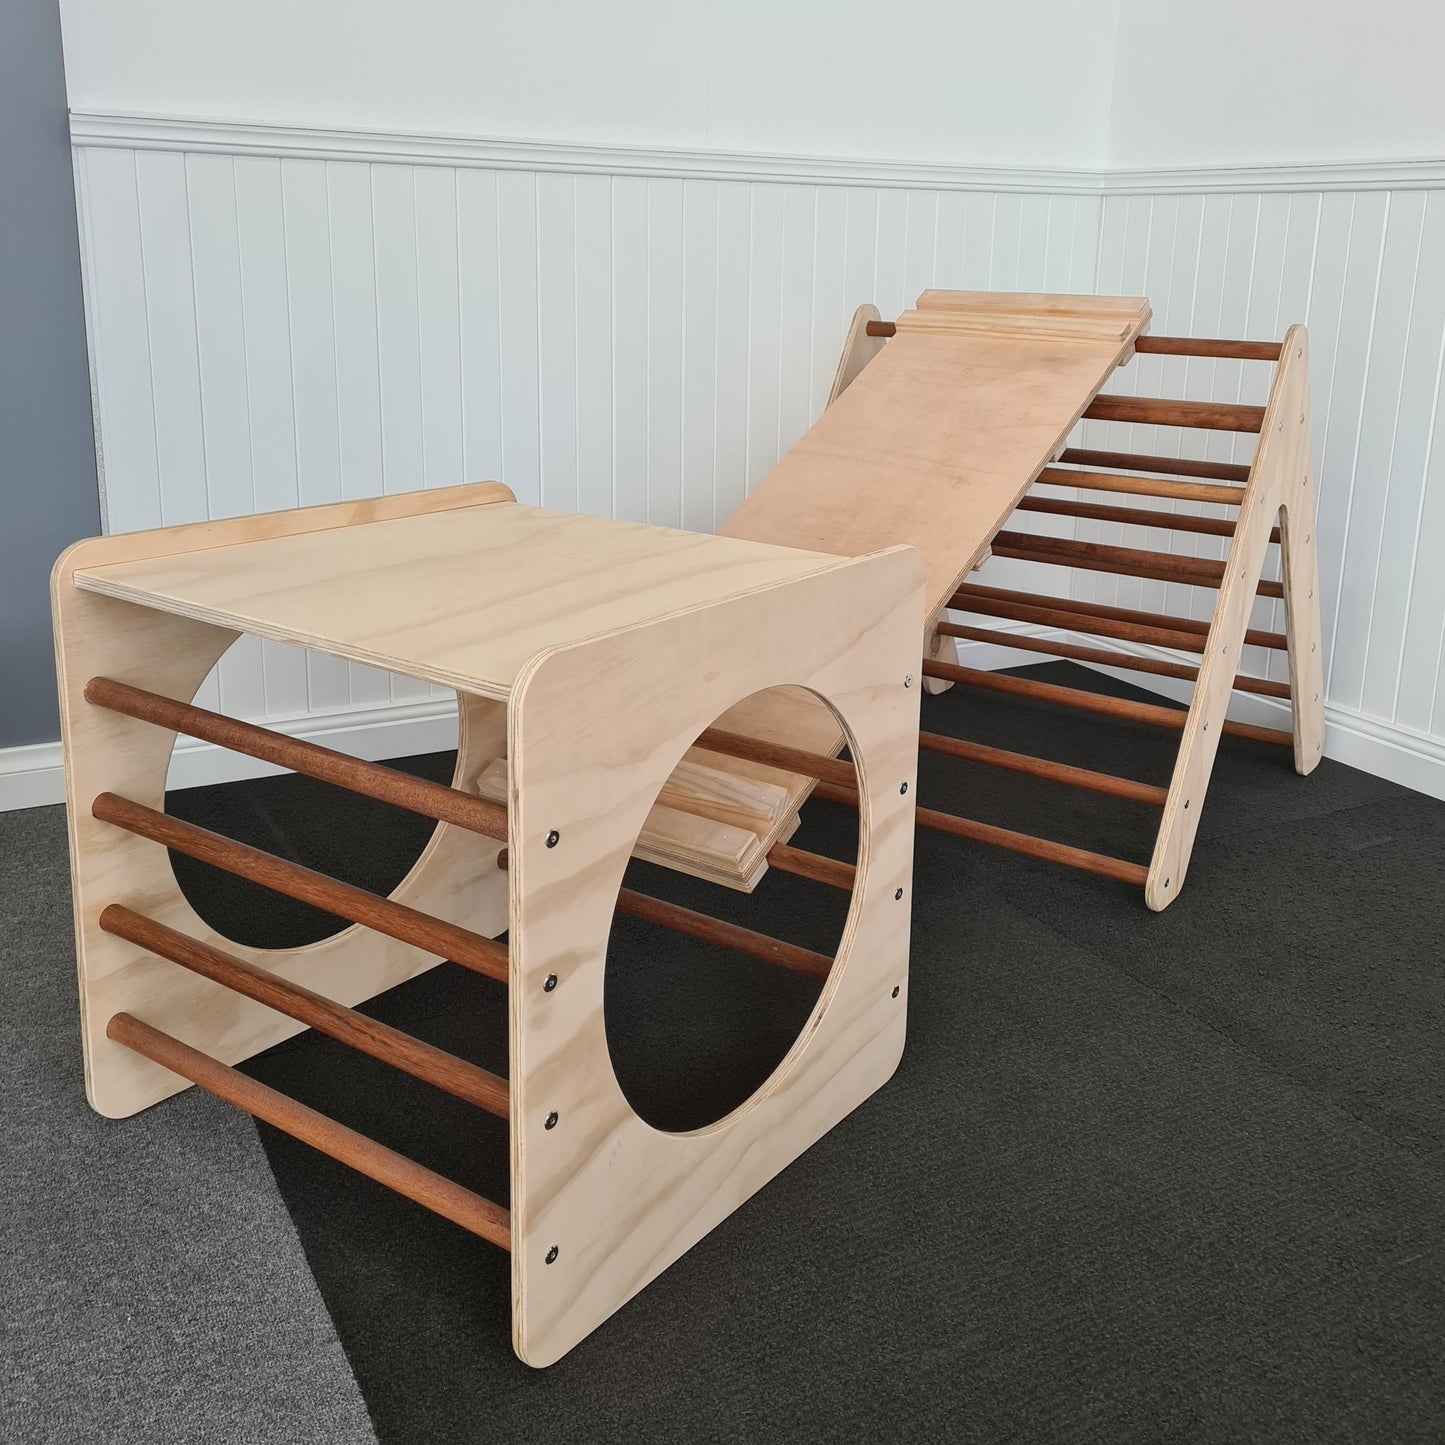 indoor-wooden-climbing-frame-slide-package